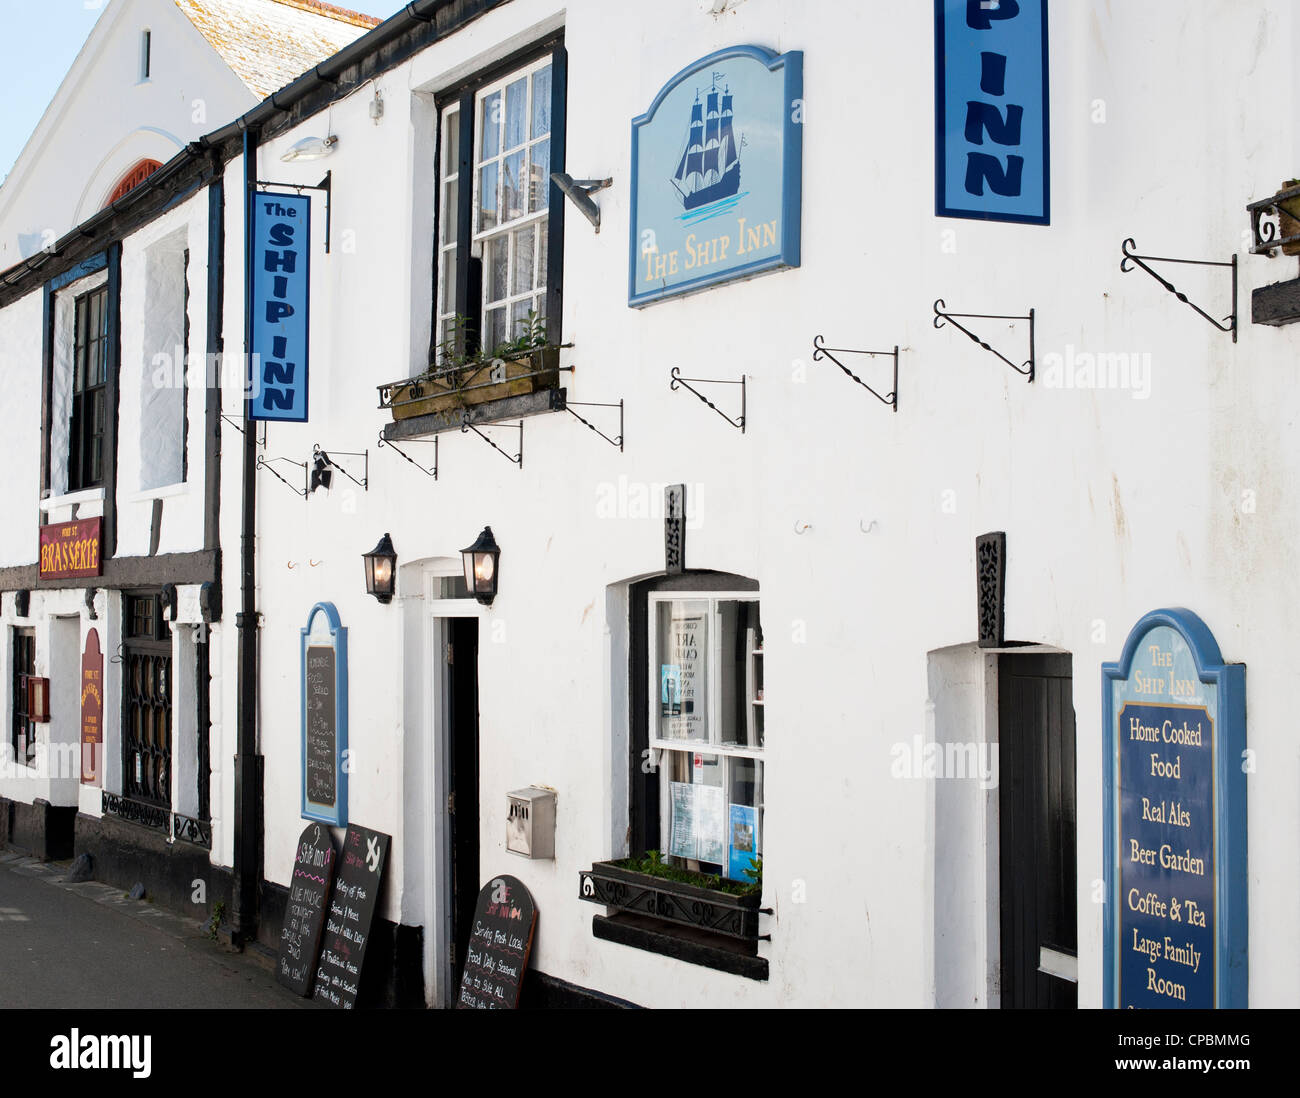 Ship Inn, Polperro, Cornwall, England Stockfoto